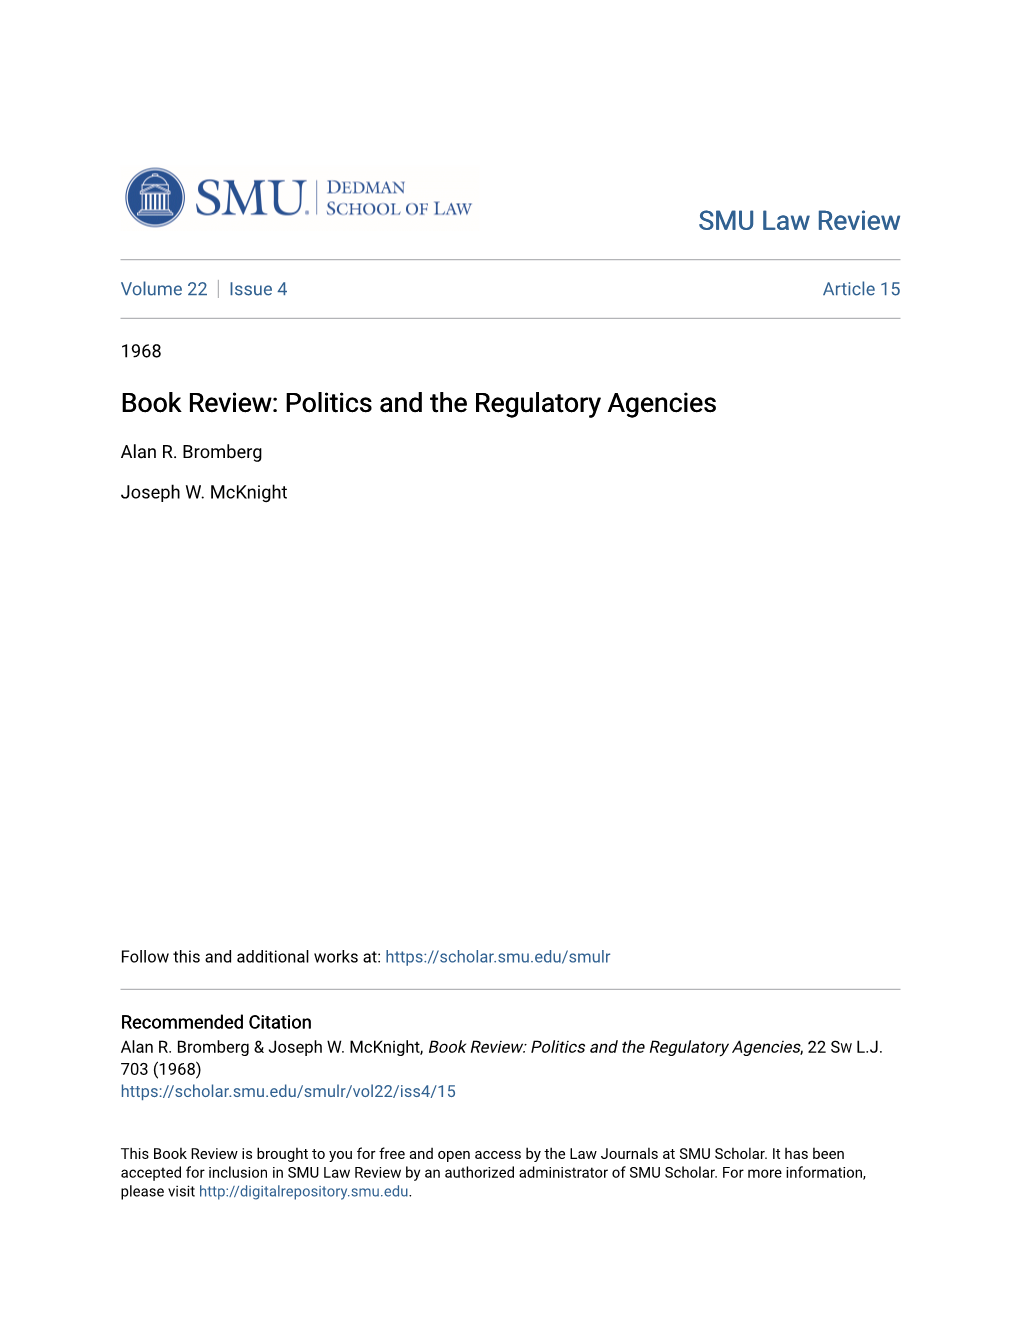 Book Review: Politics and the Regulatory Agencies